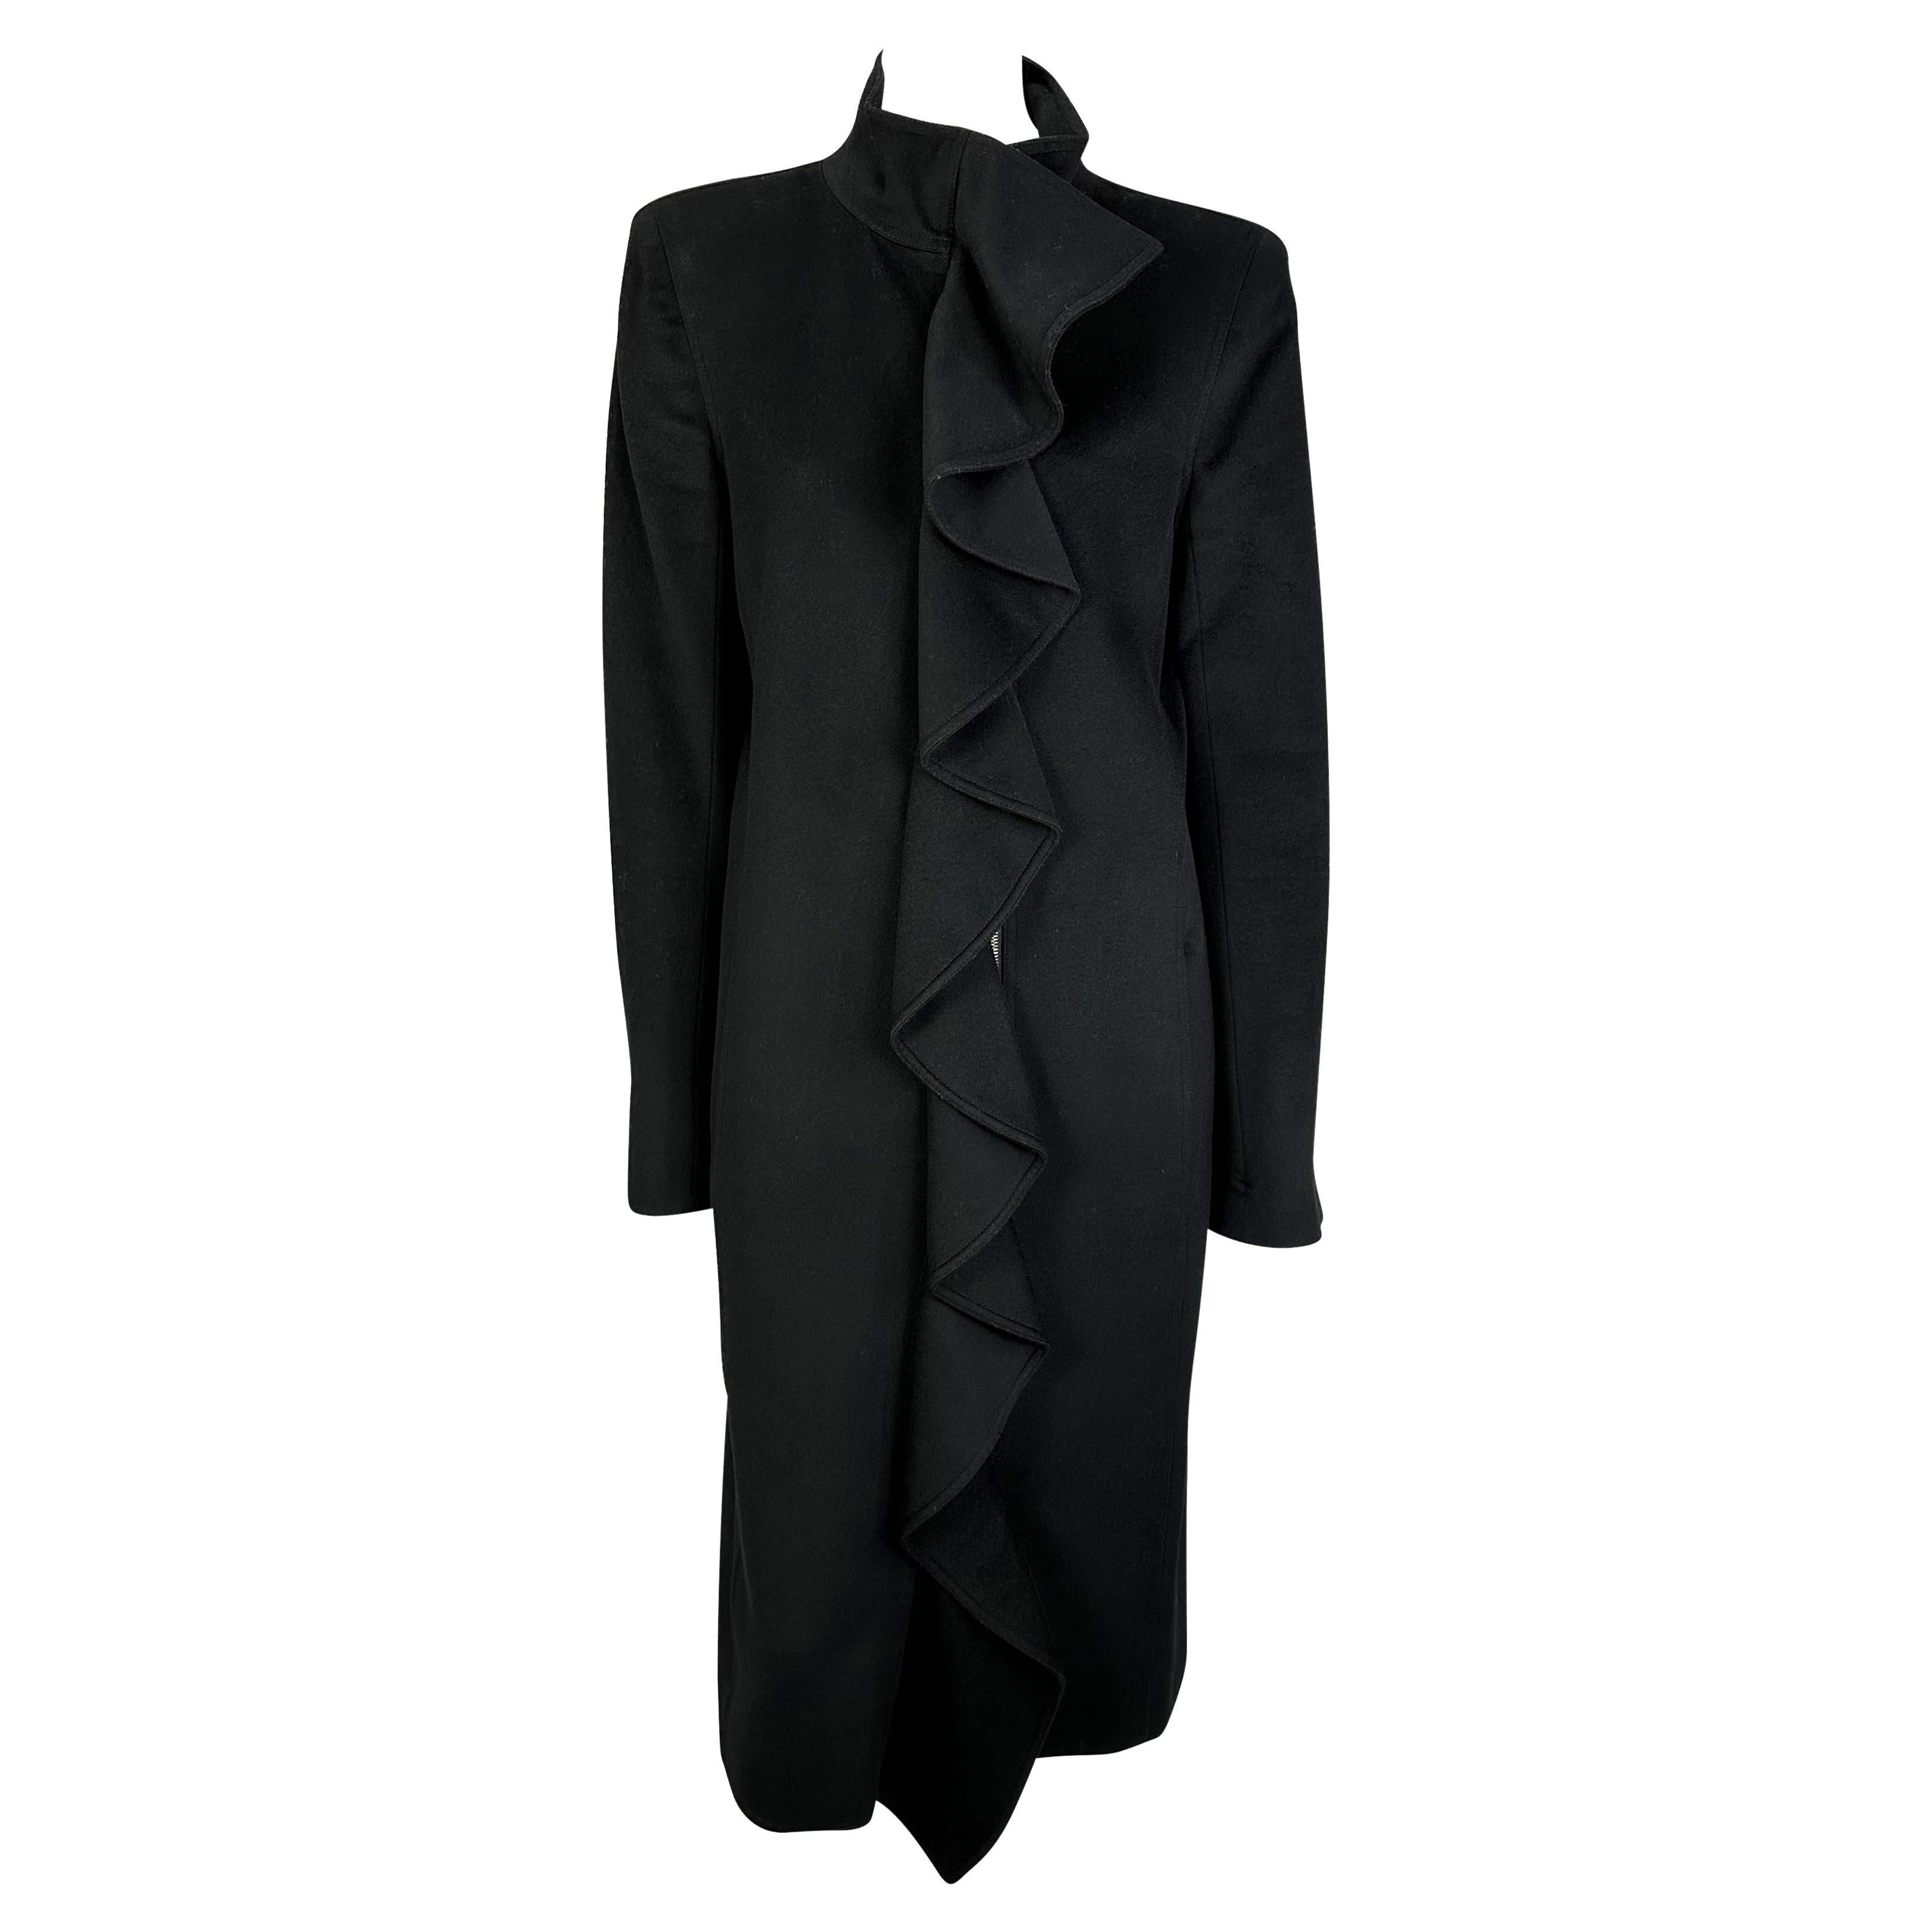 F/W 2003 Yves Saint Laurent by Tom Ford Runway Ruffle Overcoat Black For Sale